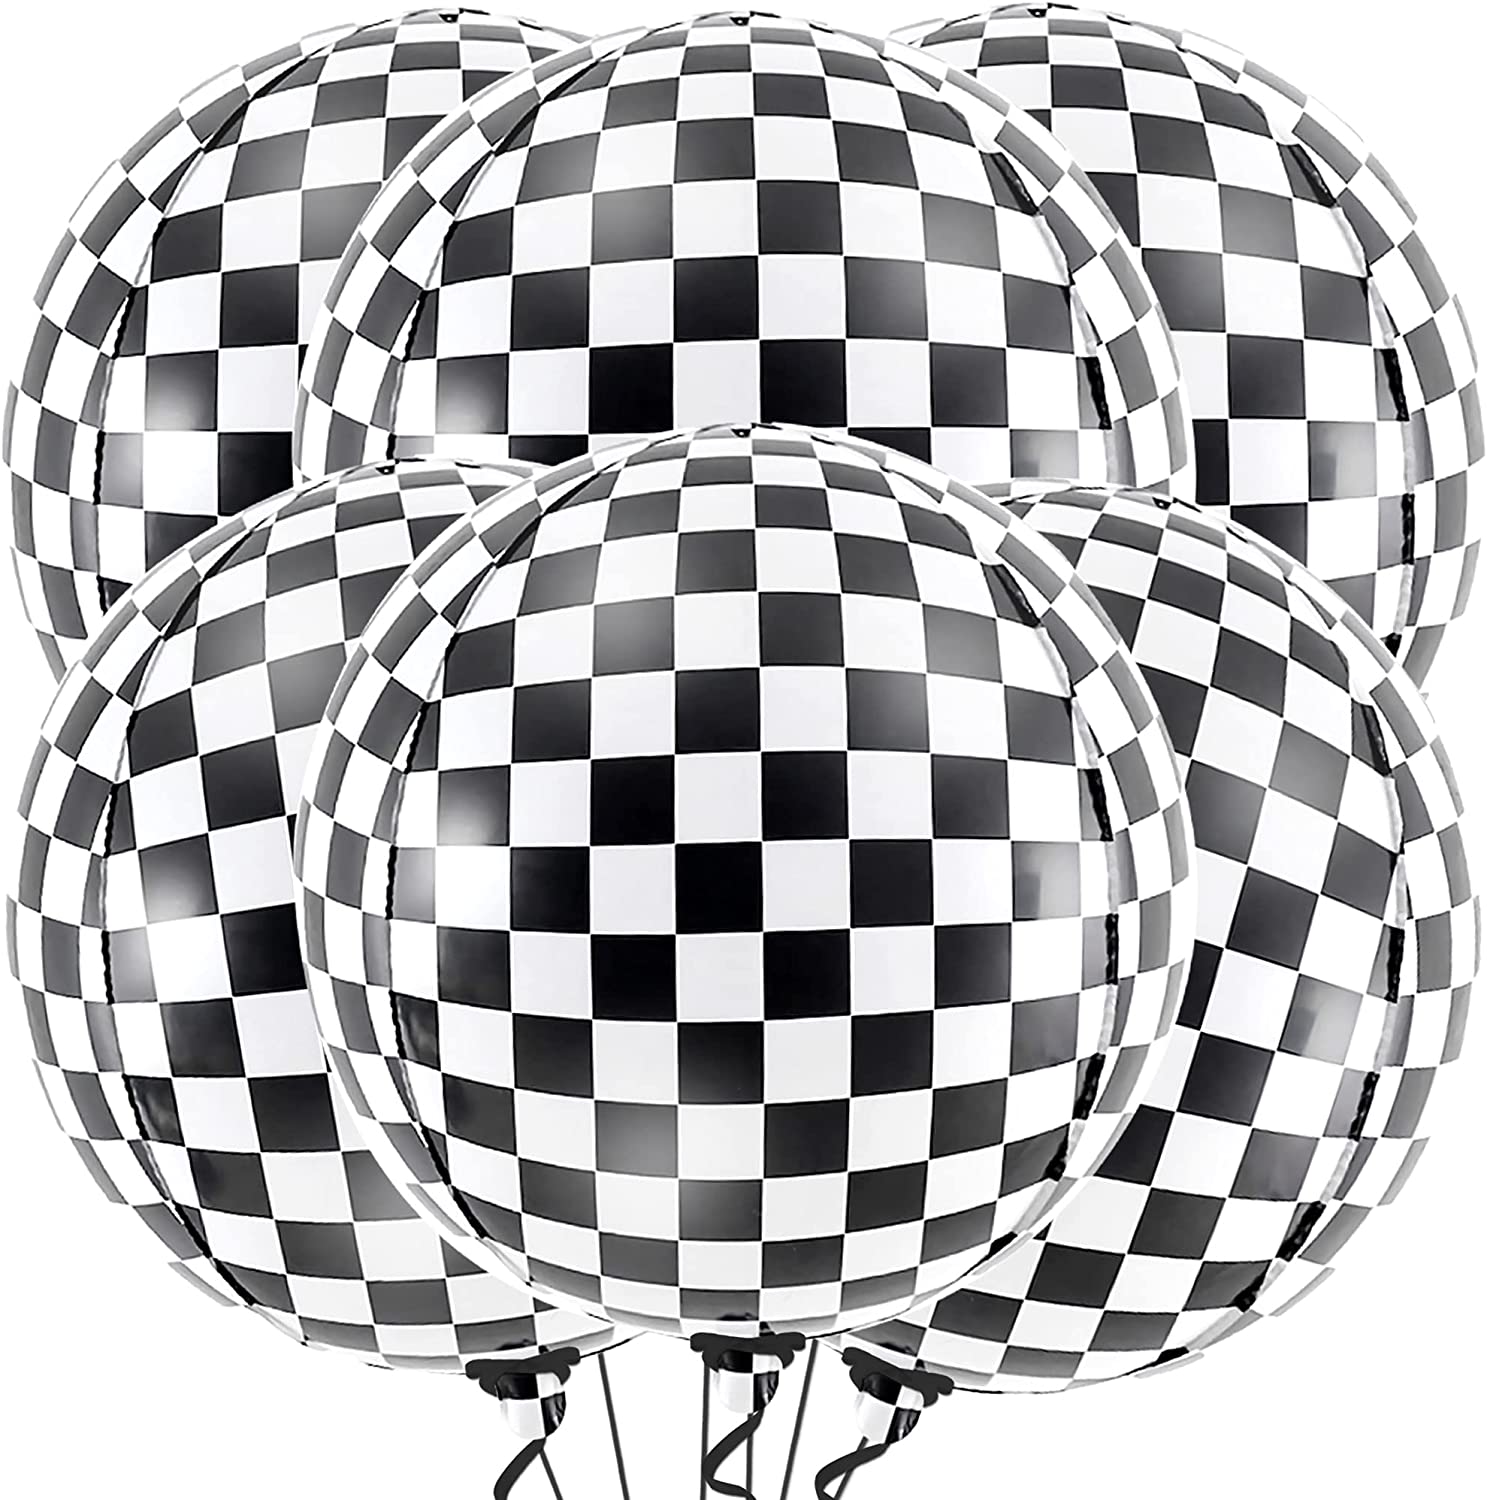 Racing Car Checkered Flag Sphere 65013